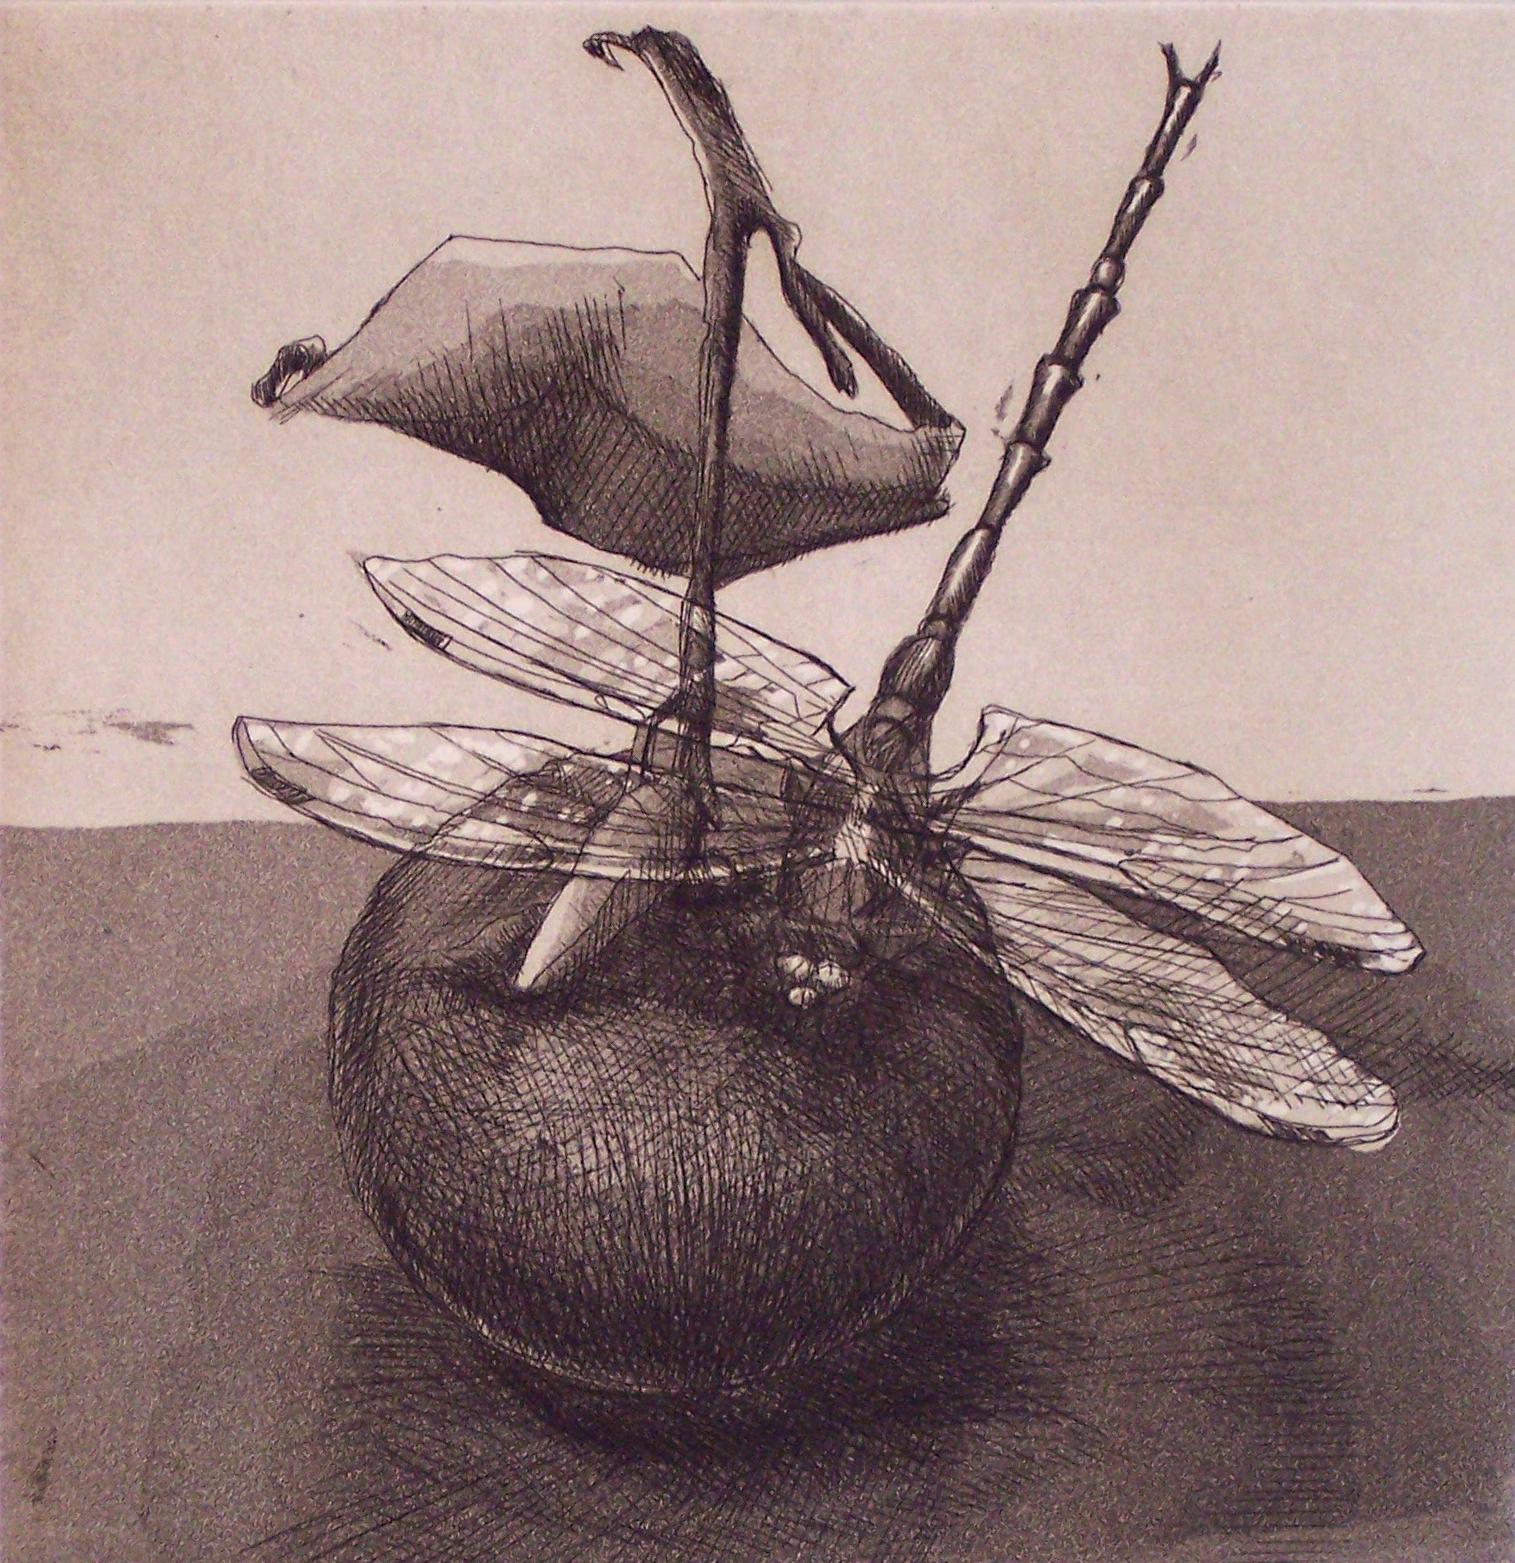 Dragonfly #3 : Monochrome etching - Art by Lisa Dinhofer